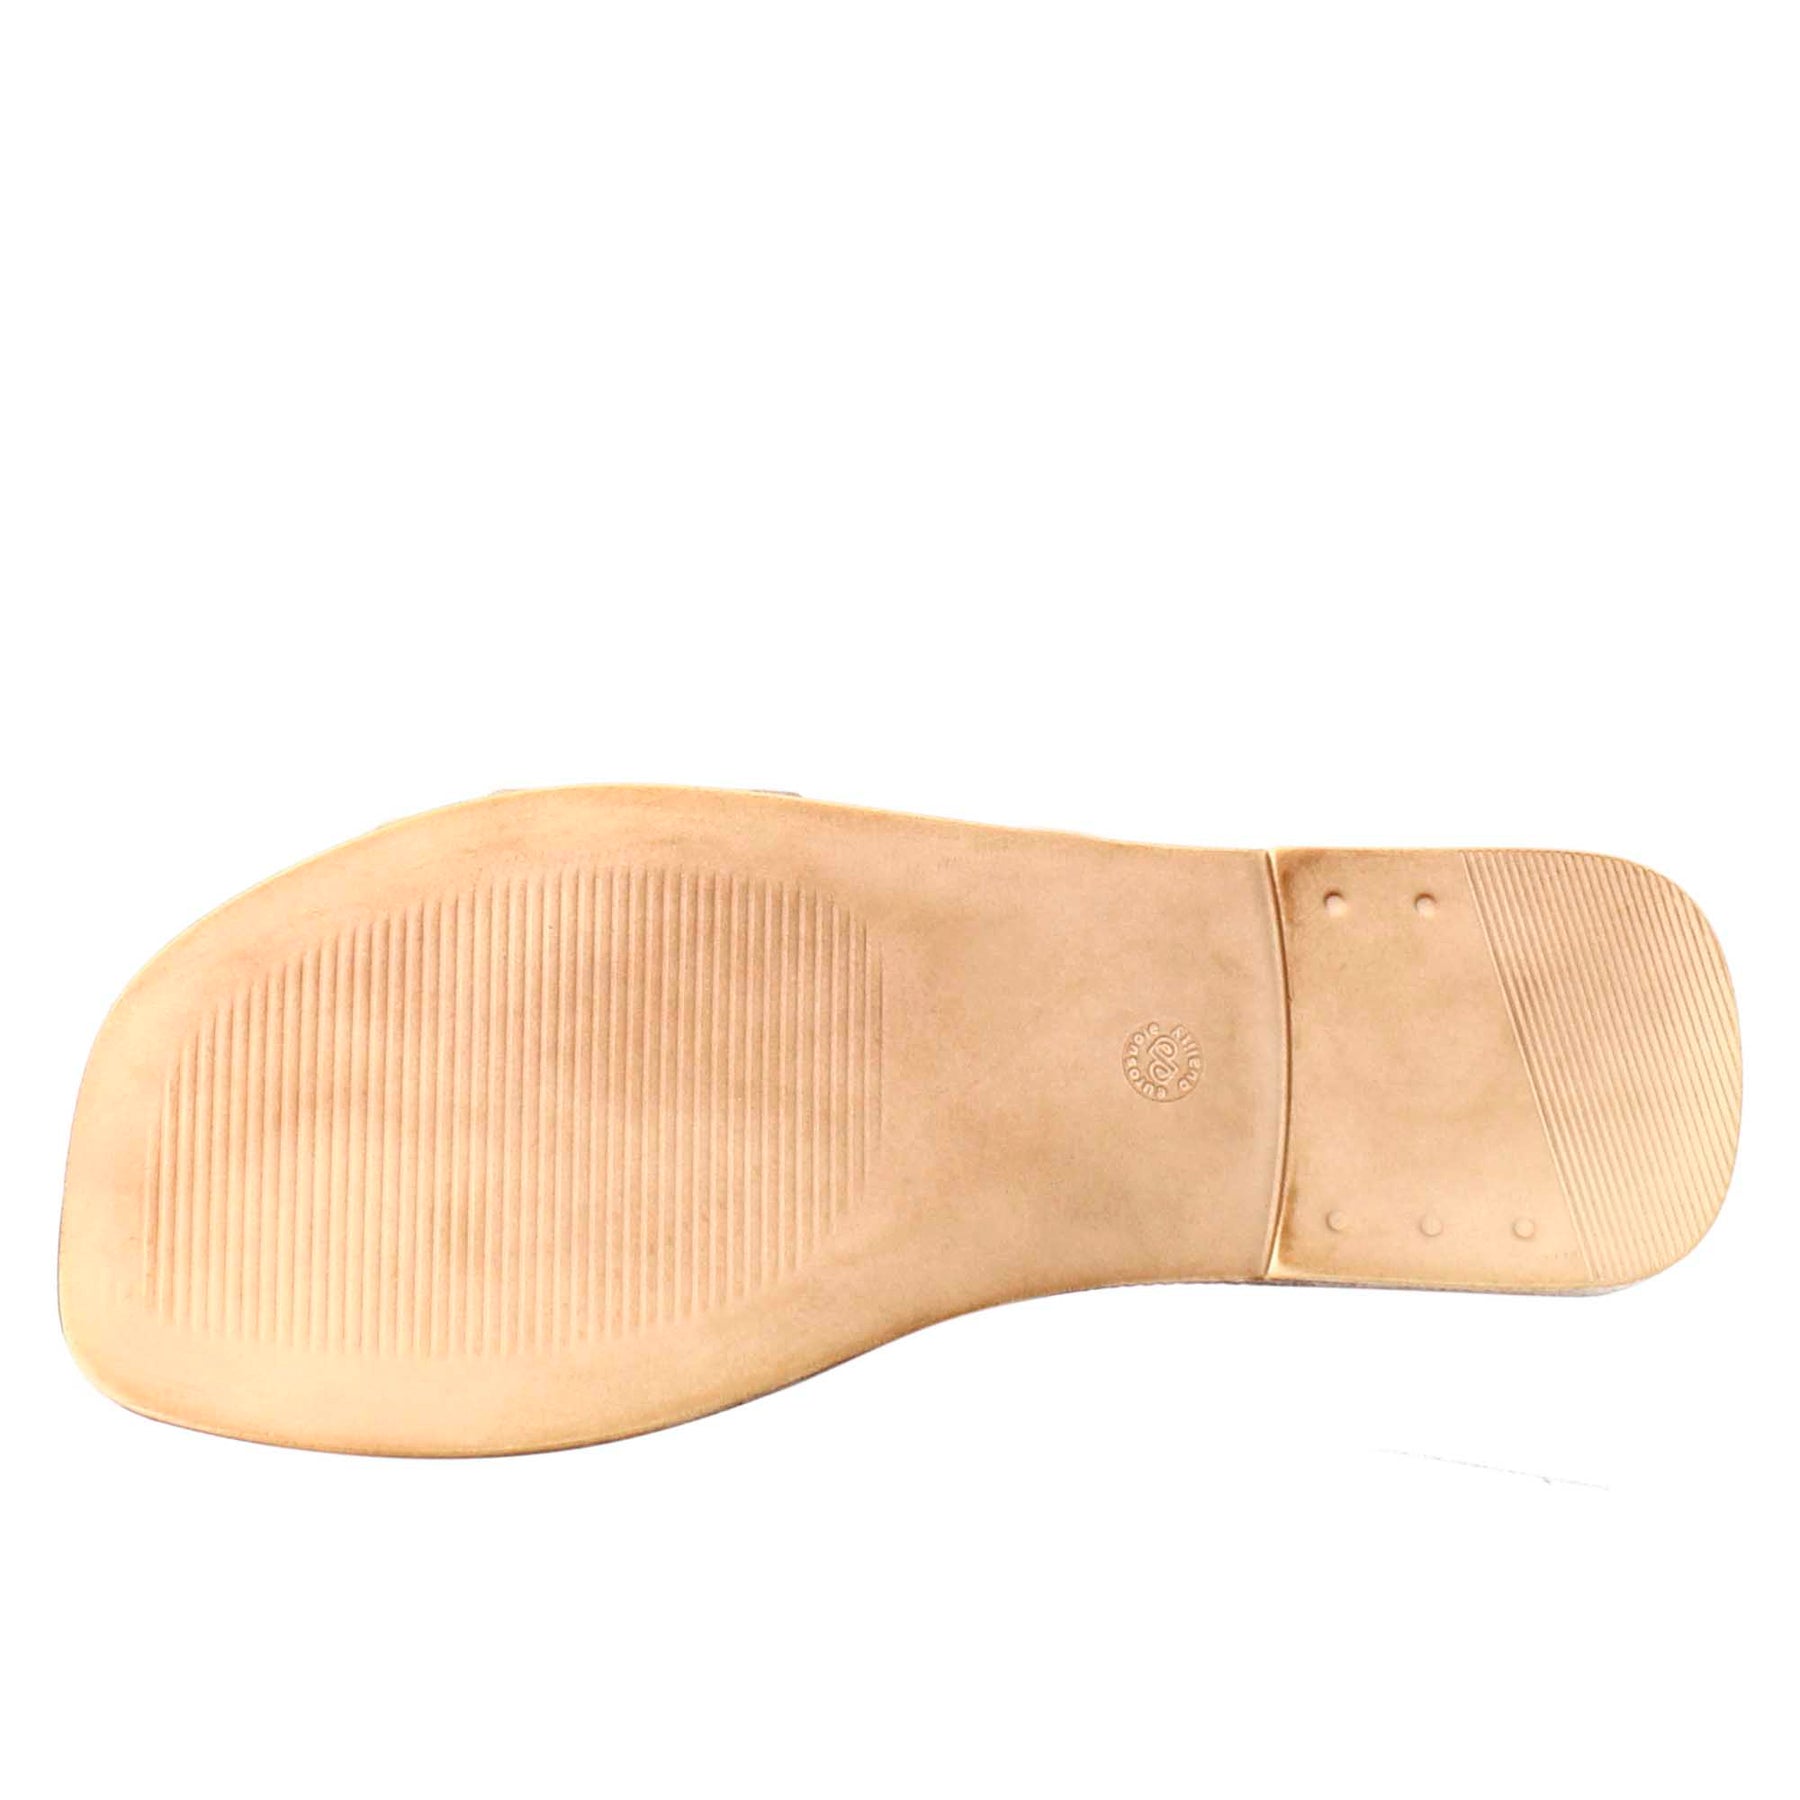 Sandale basse pour femme en daim beige